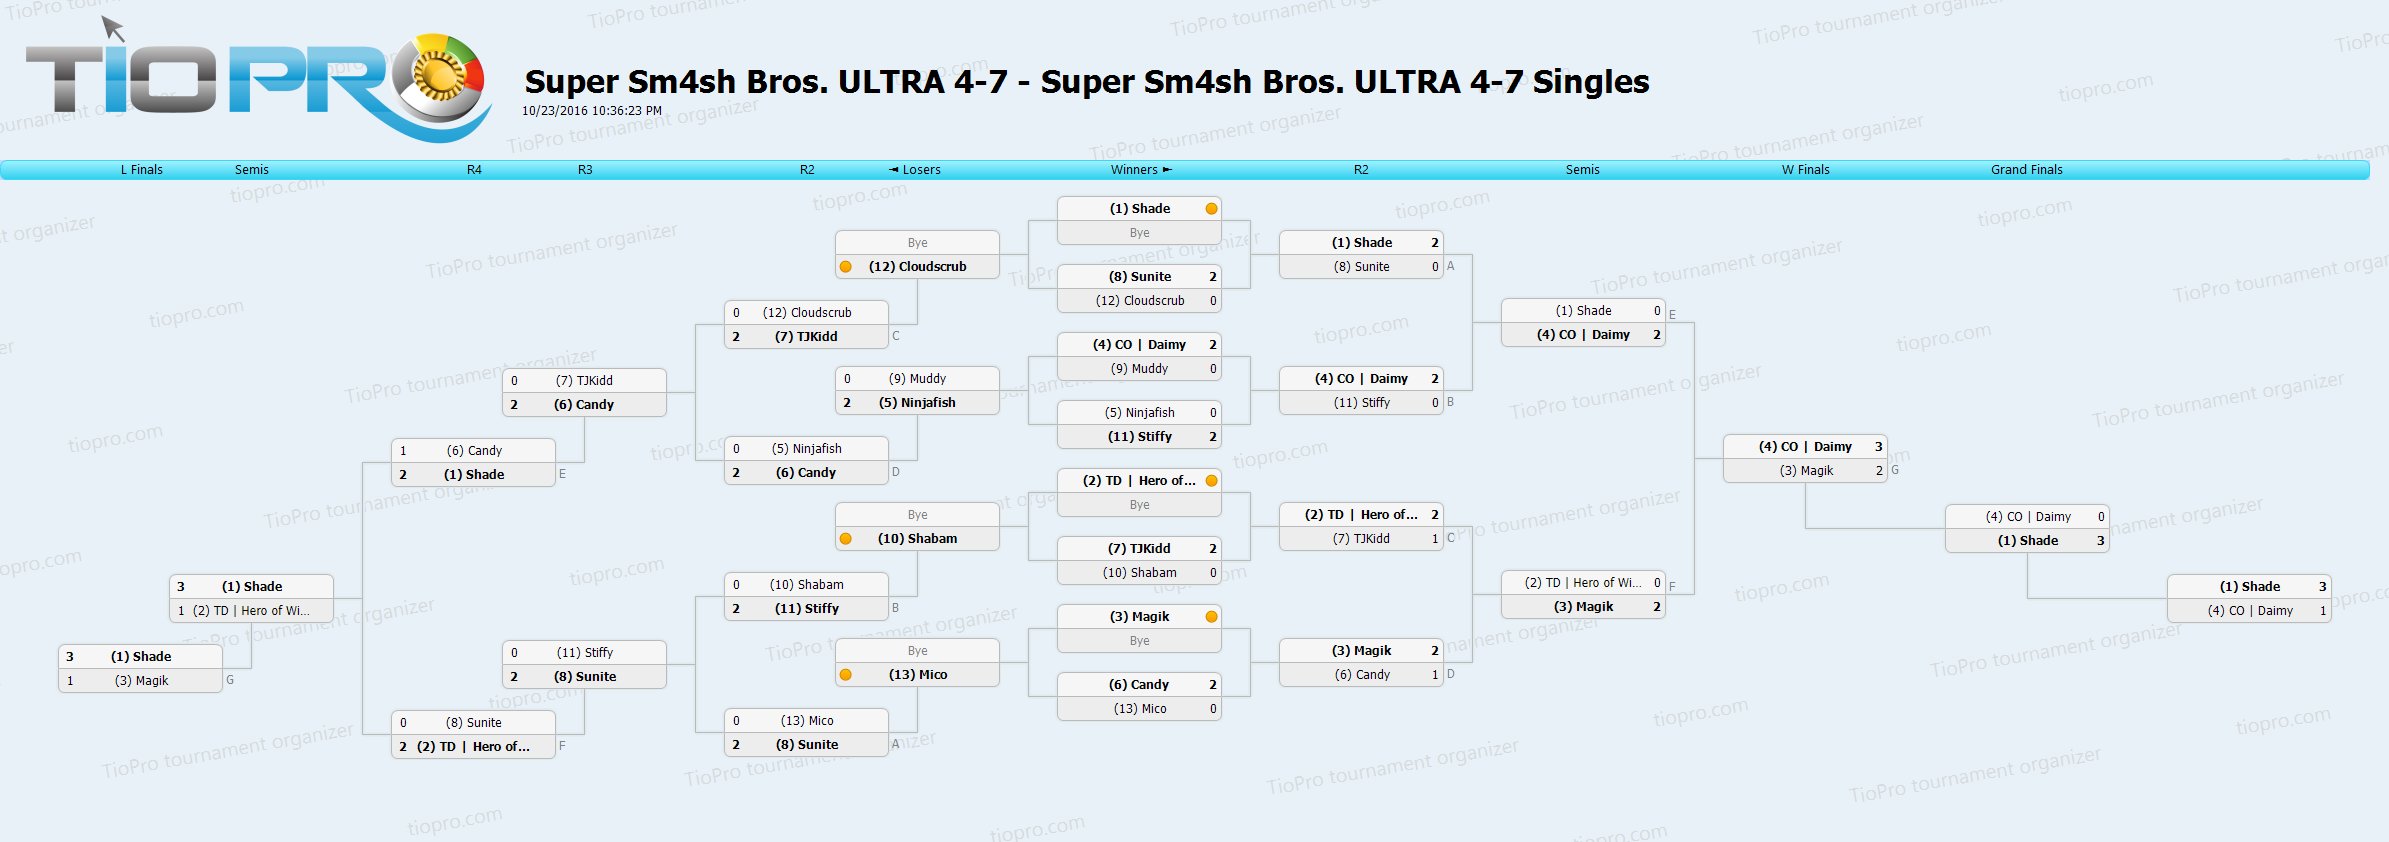 Super Sm4sh Bros. ULTRA 4-7 Singles